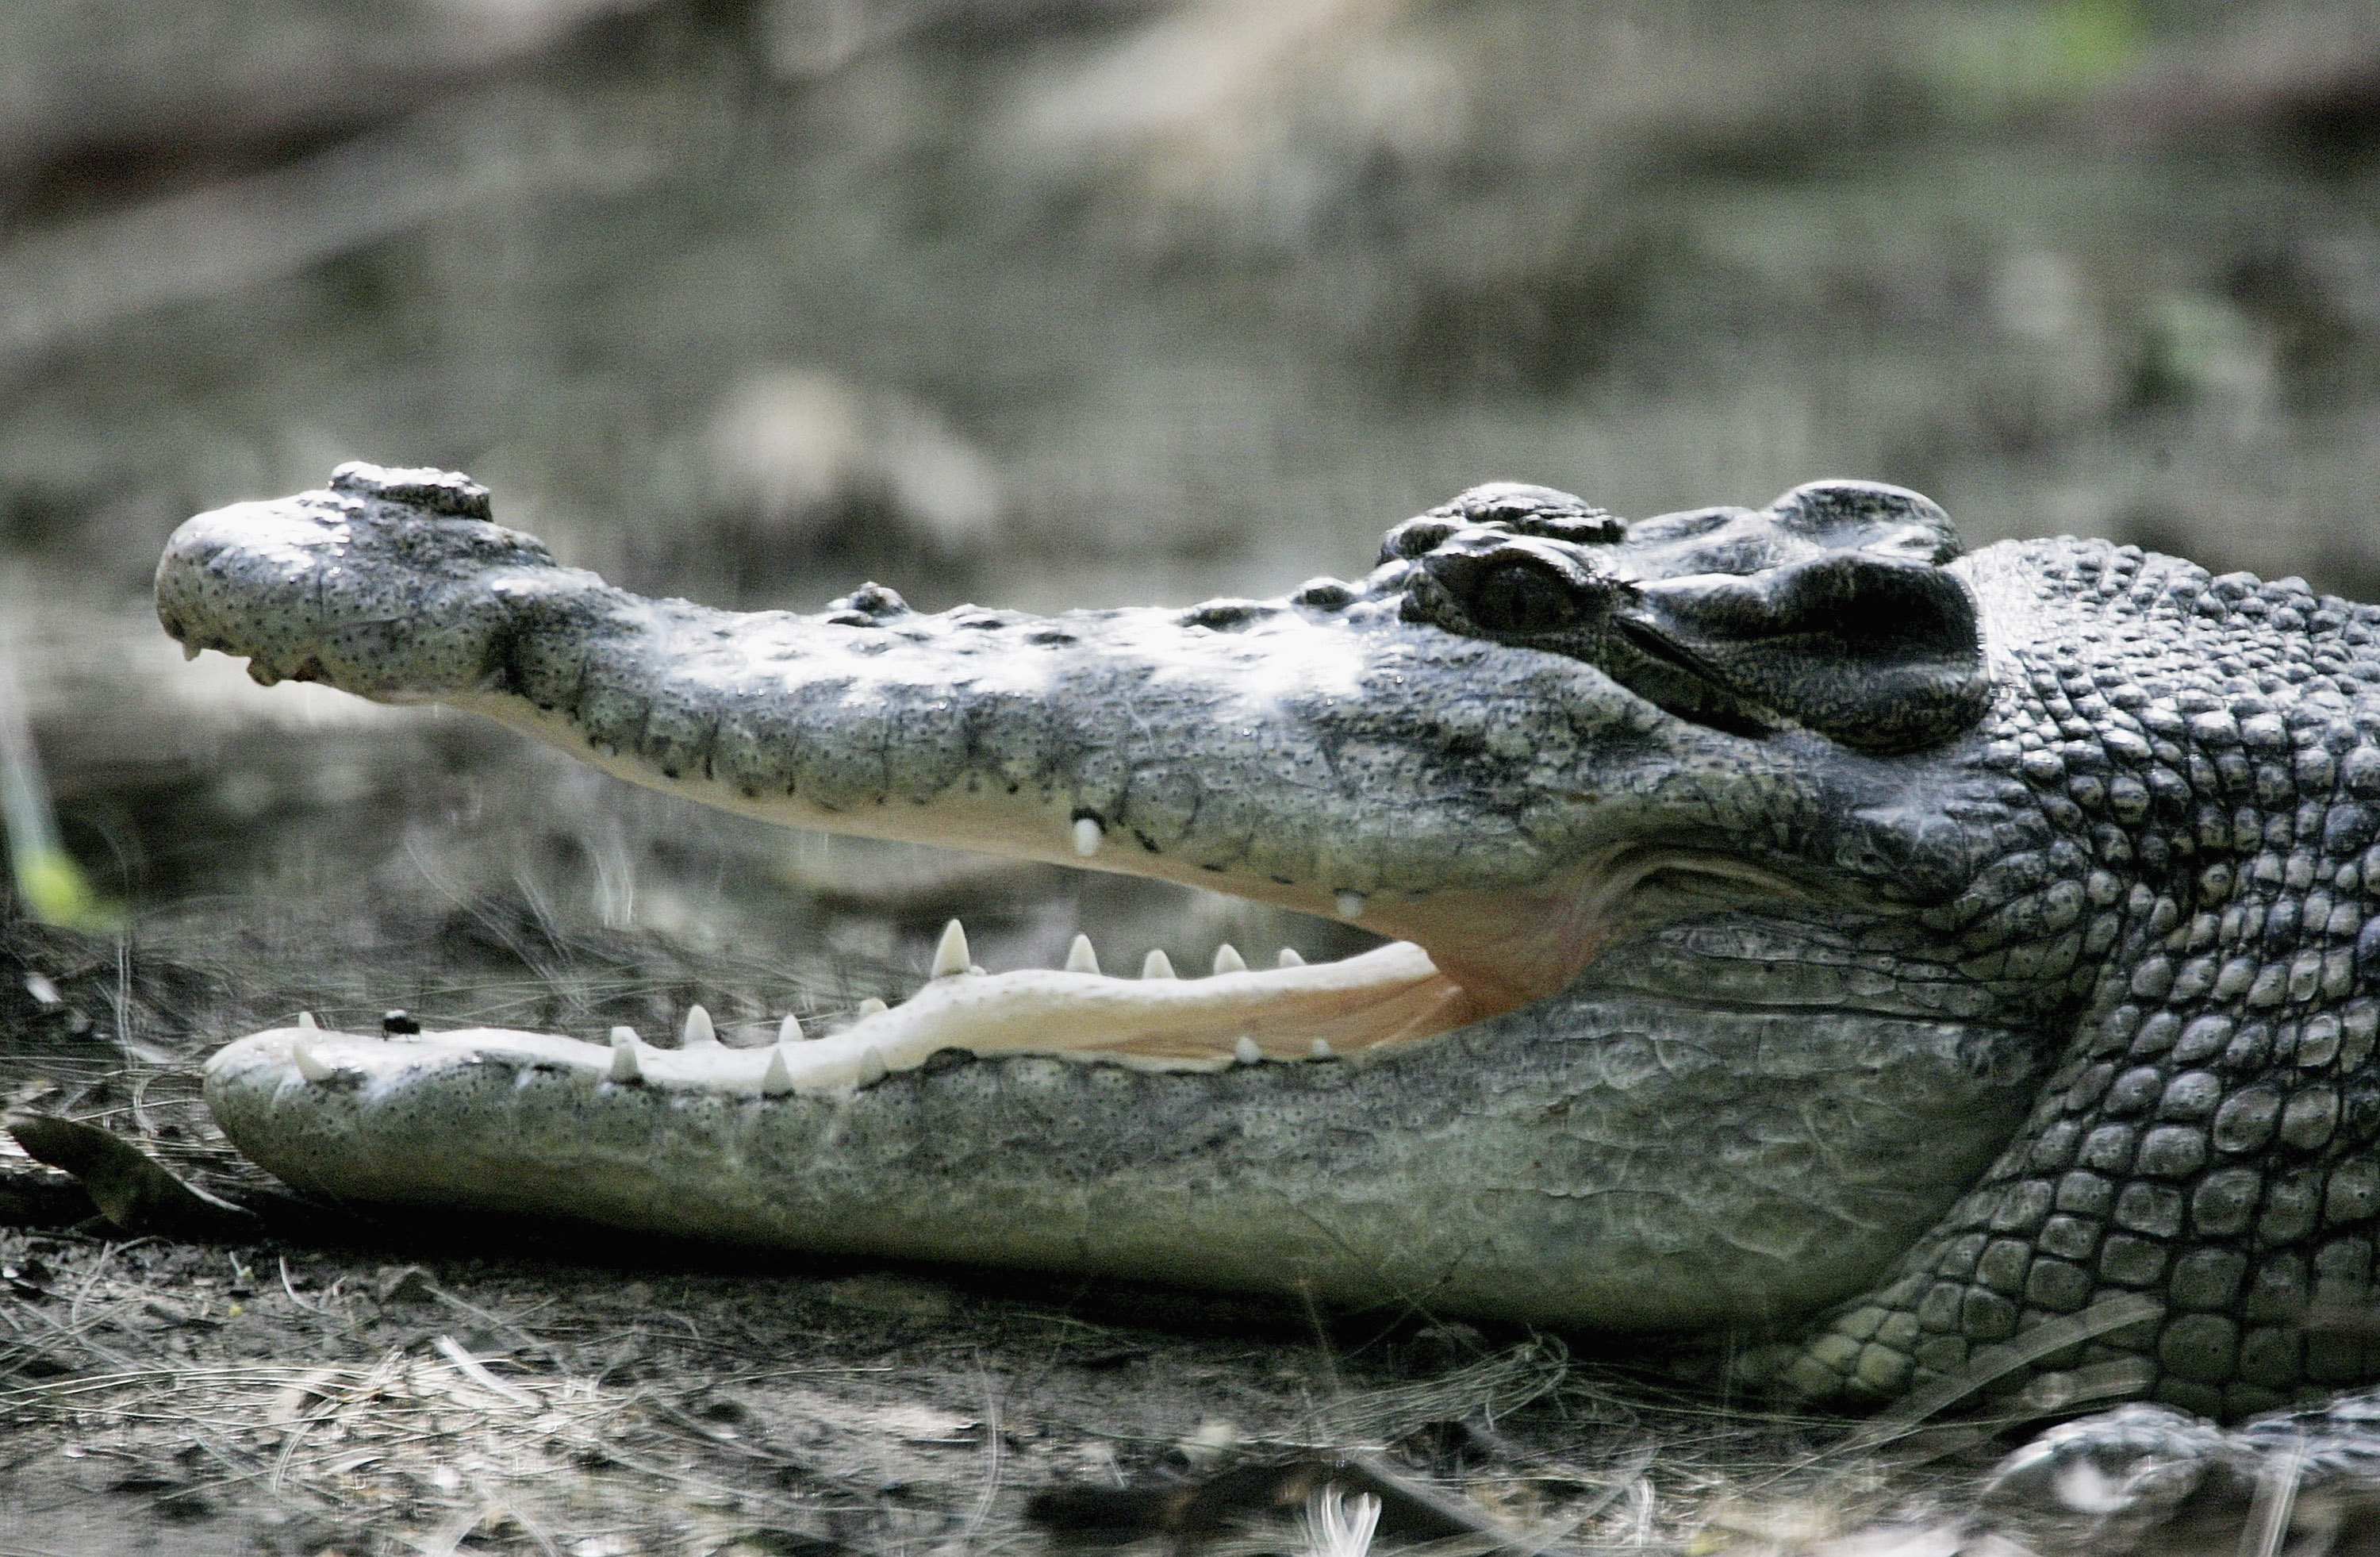 Crocodile attack in Australia: Boy, 12, killed CNN